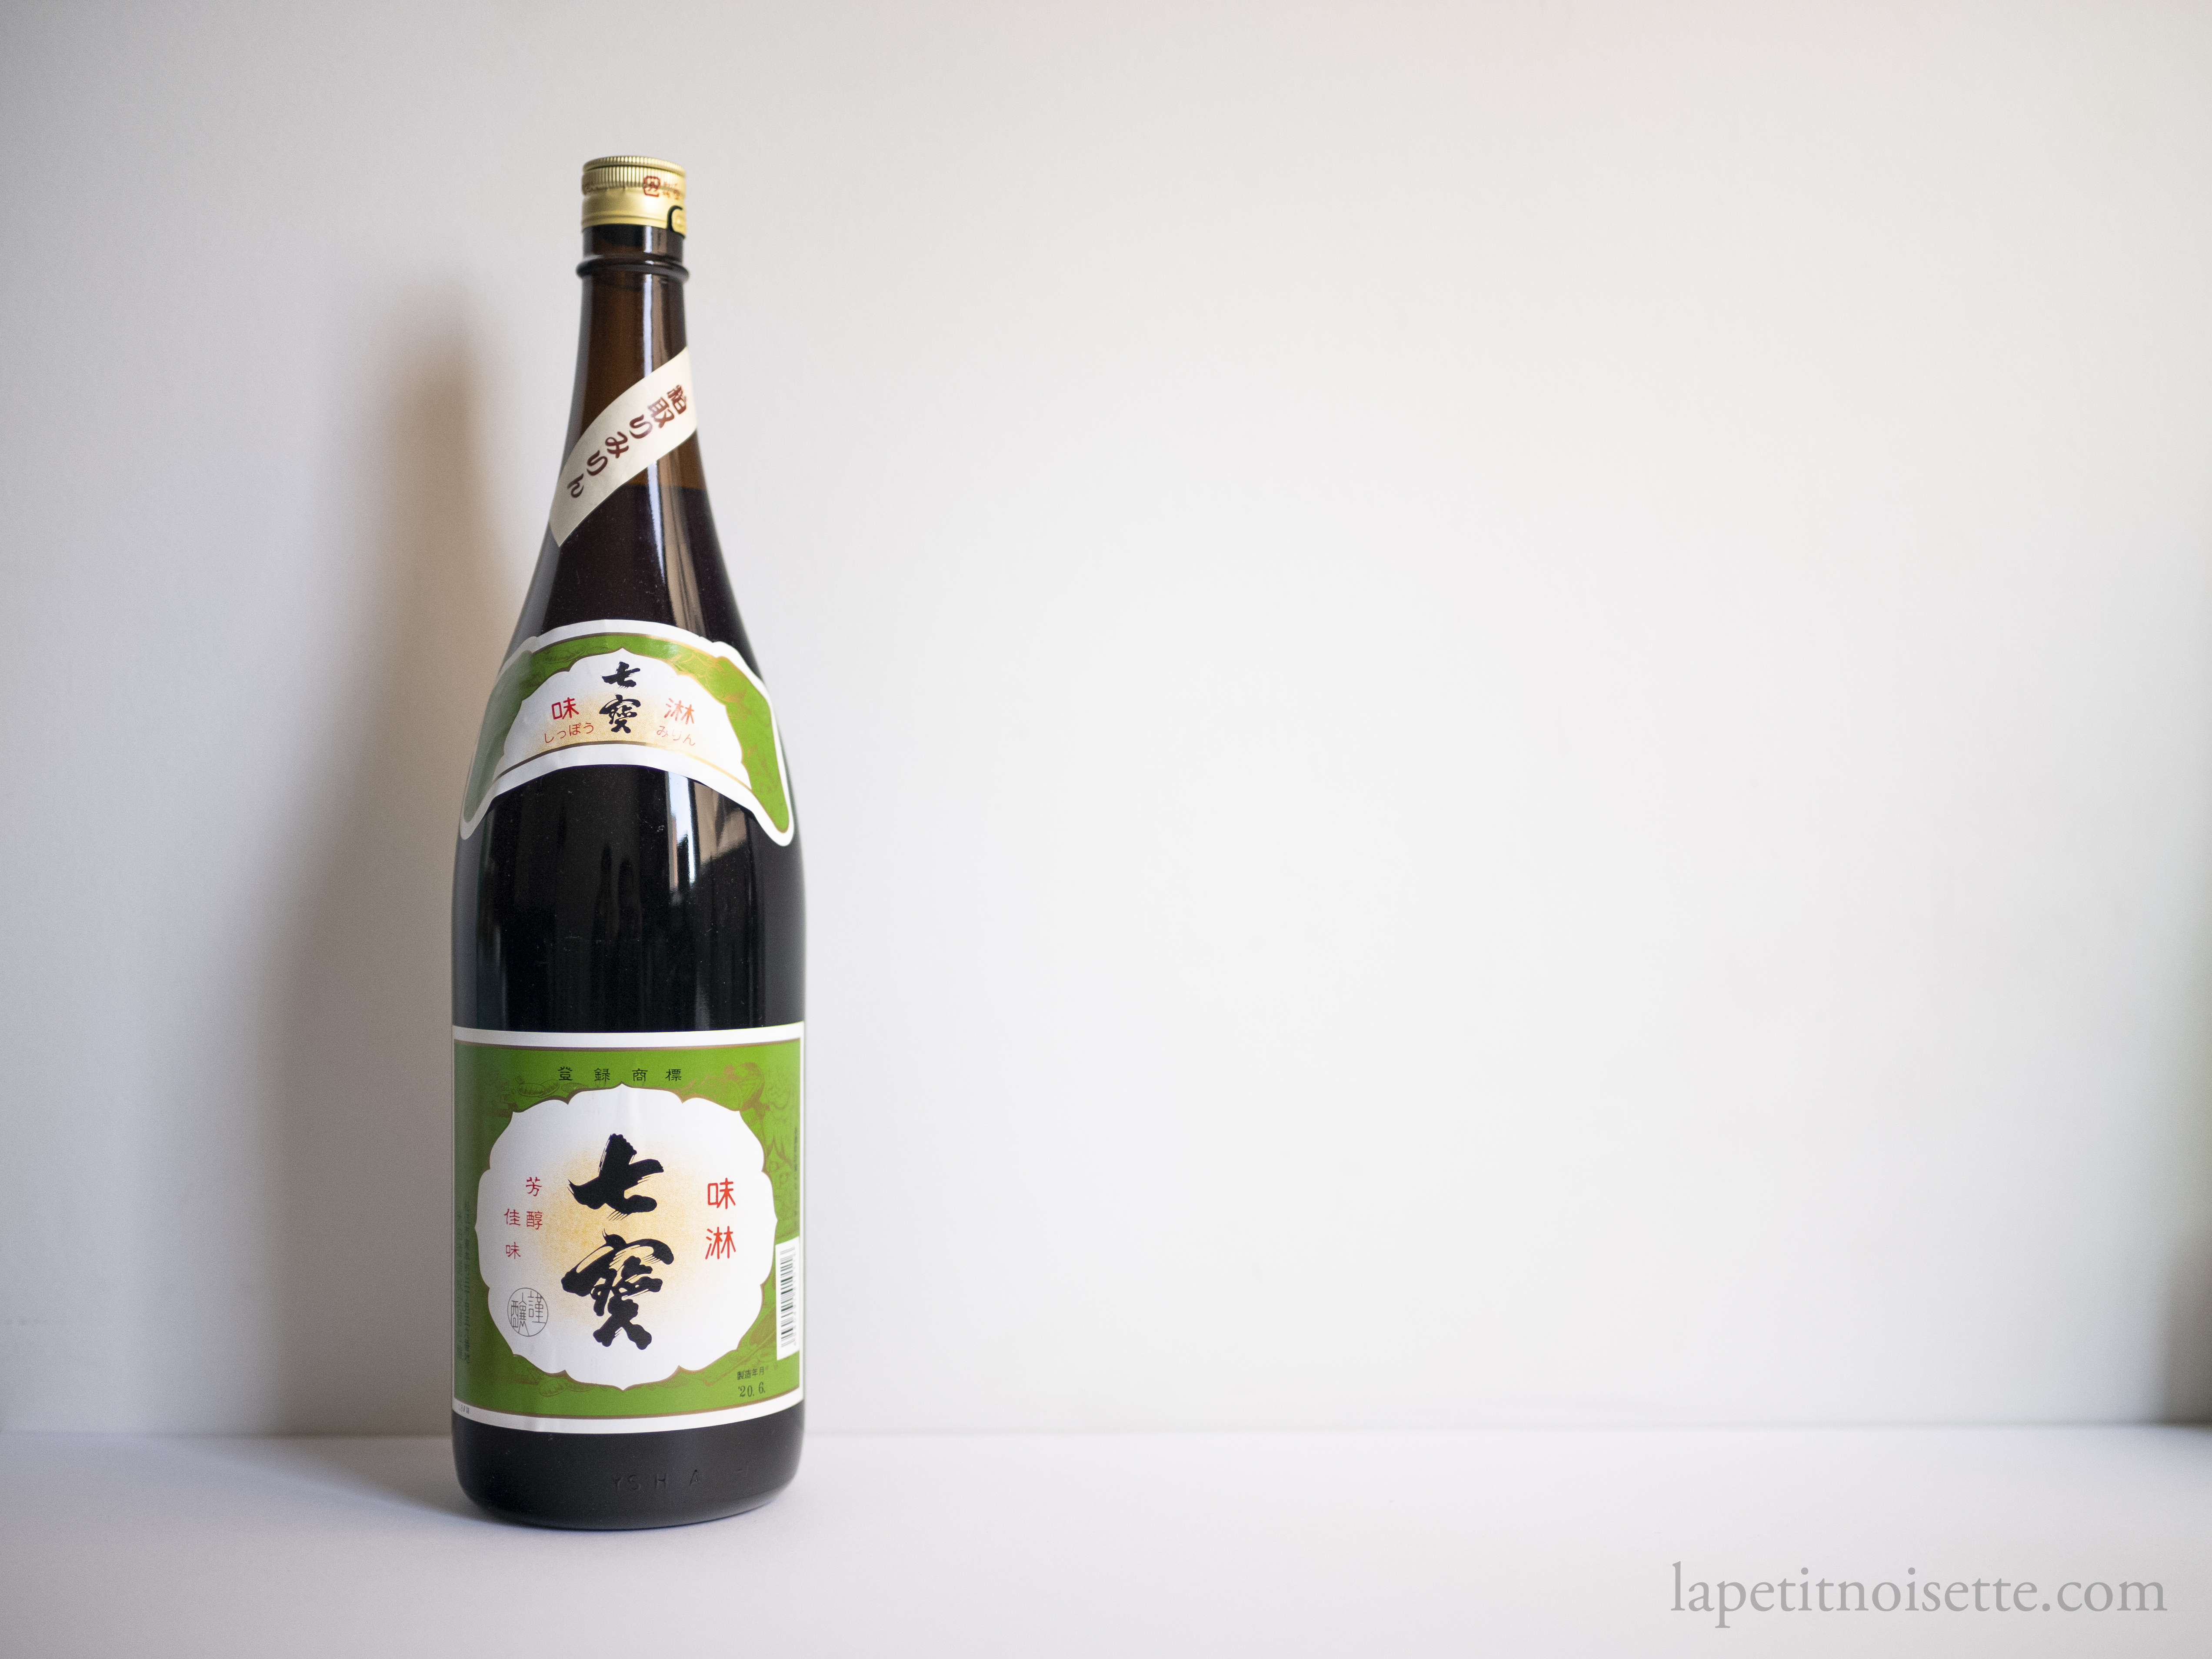 Yoneda sake brewery mirin